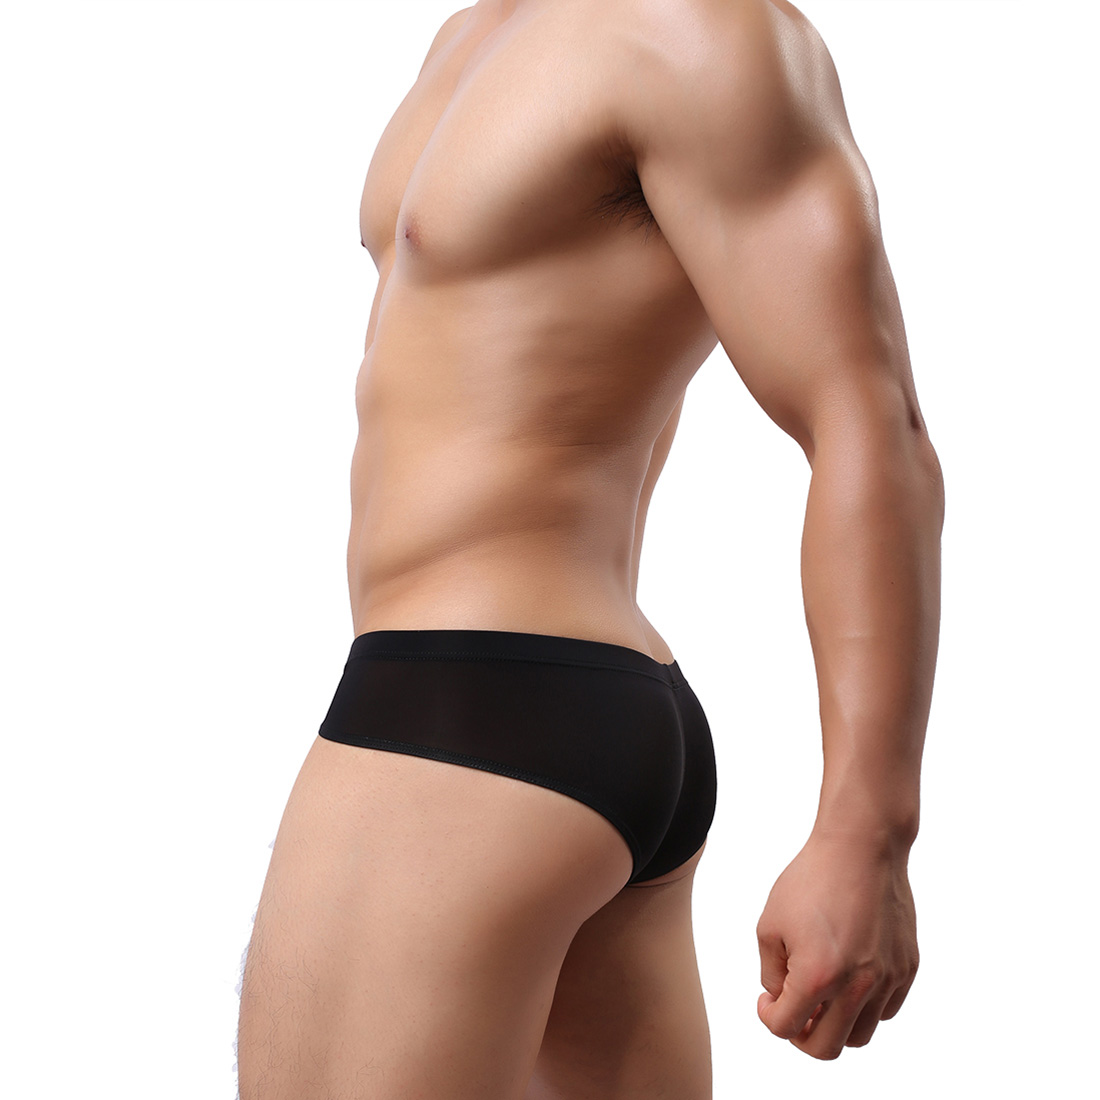 Men's Sexy Lingerie Underwear See-through Briefs Shorts Underpants WH43 Black XL